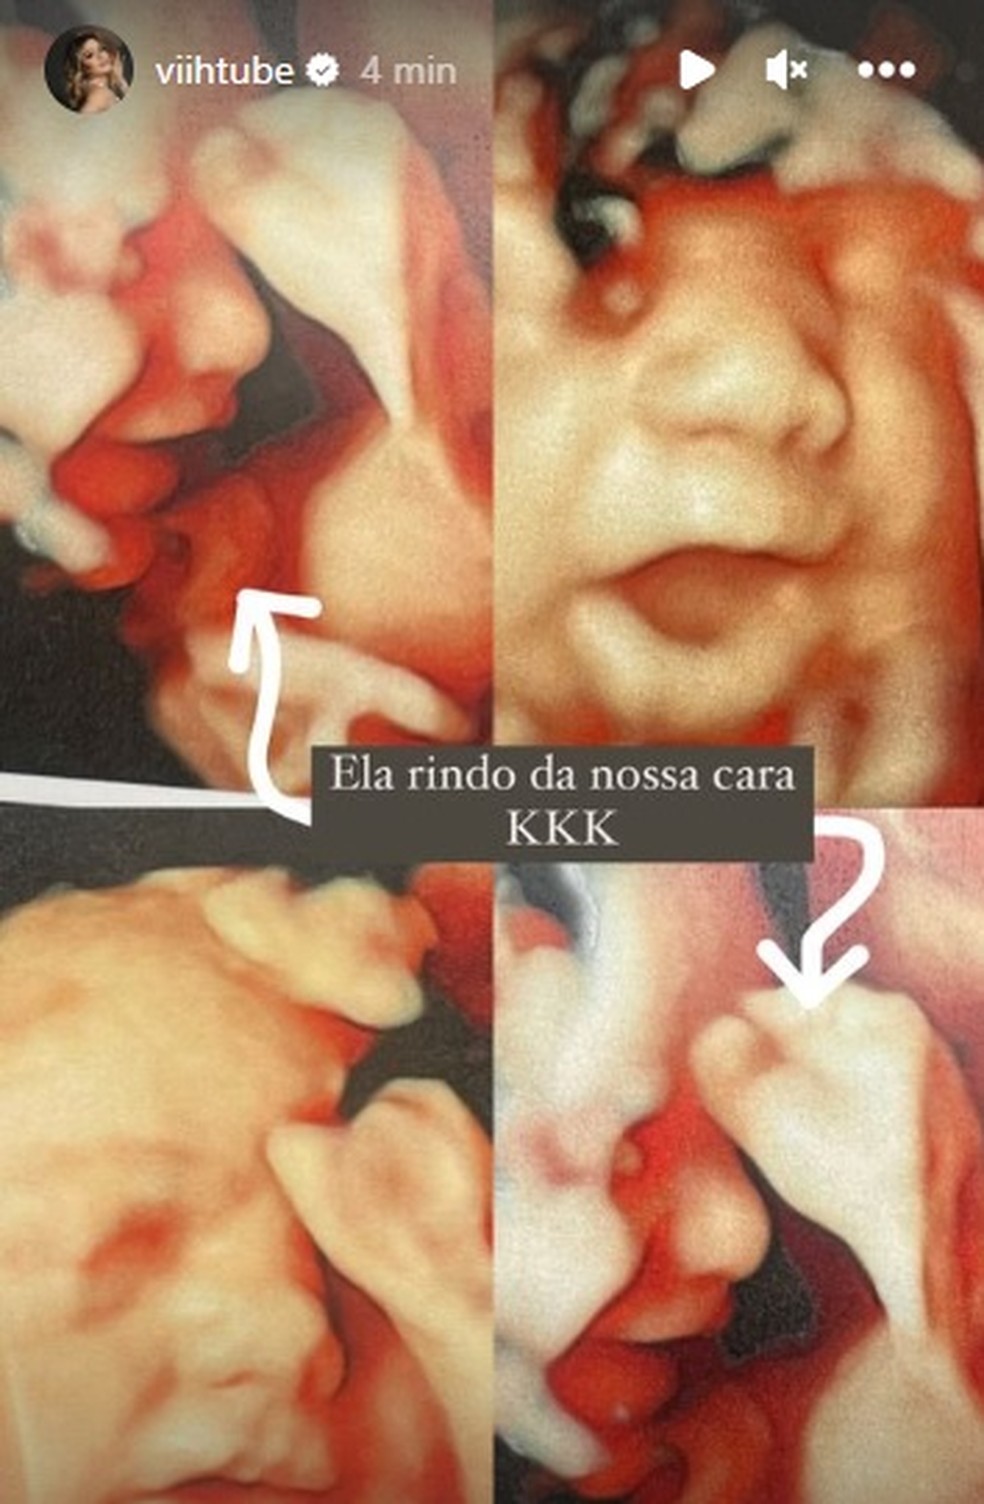 Viih Tube mostra rosto da filha durante ultrassom 